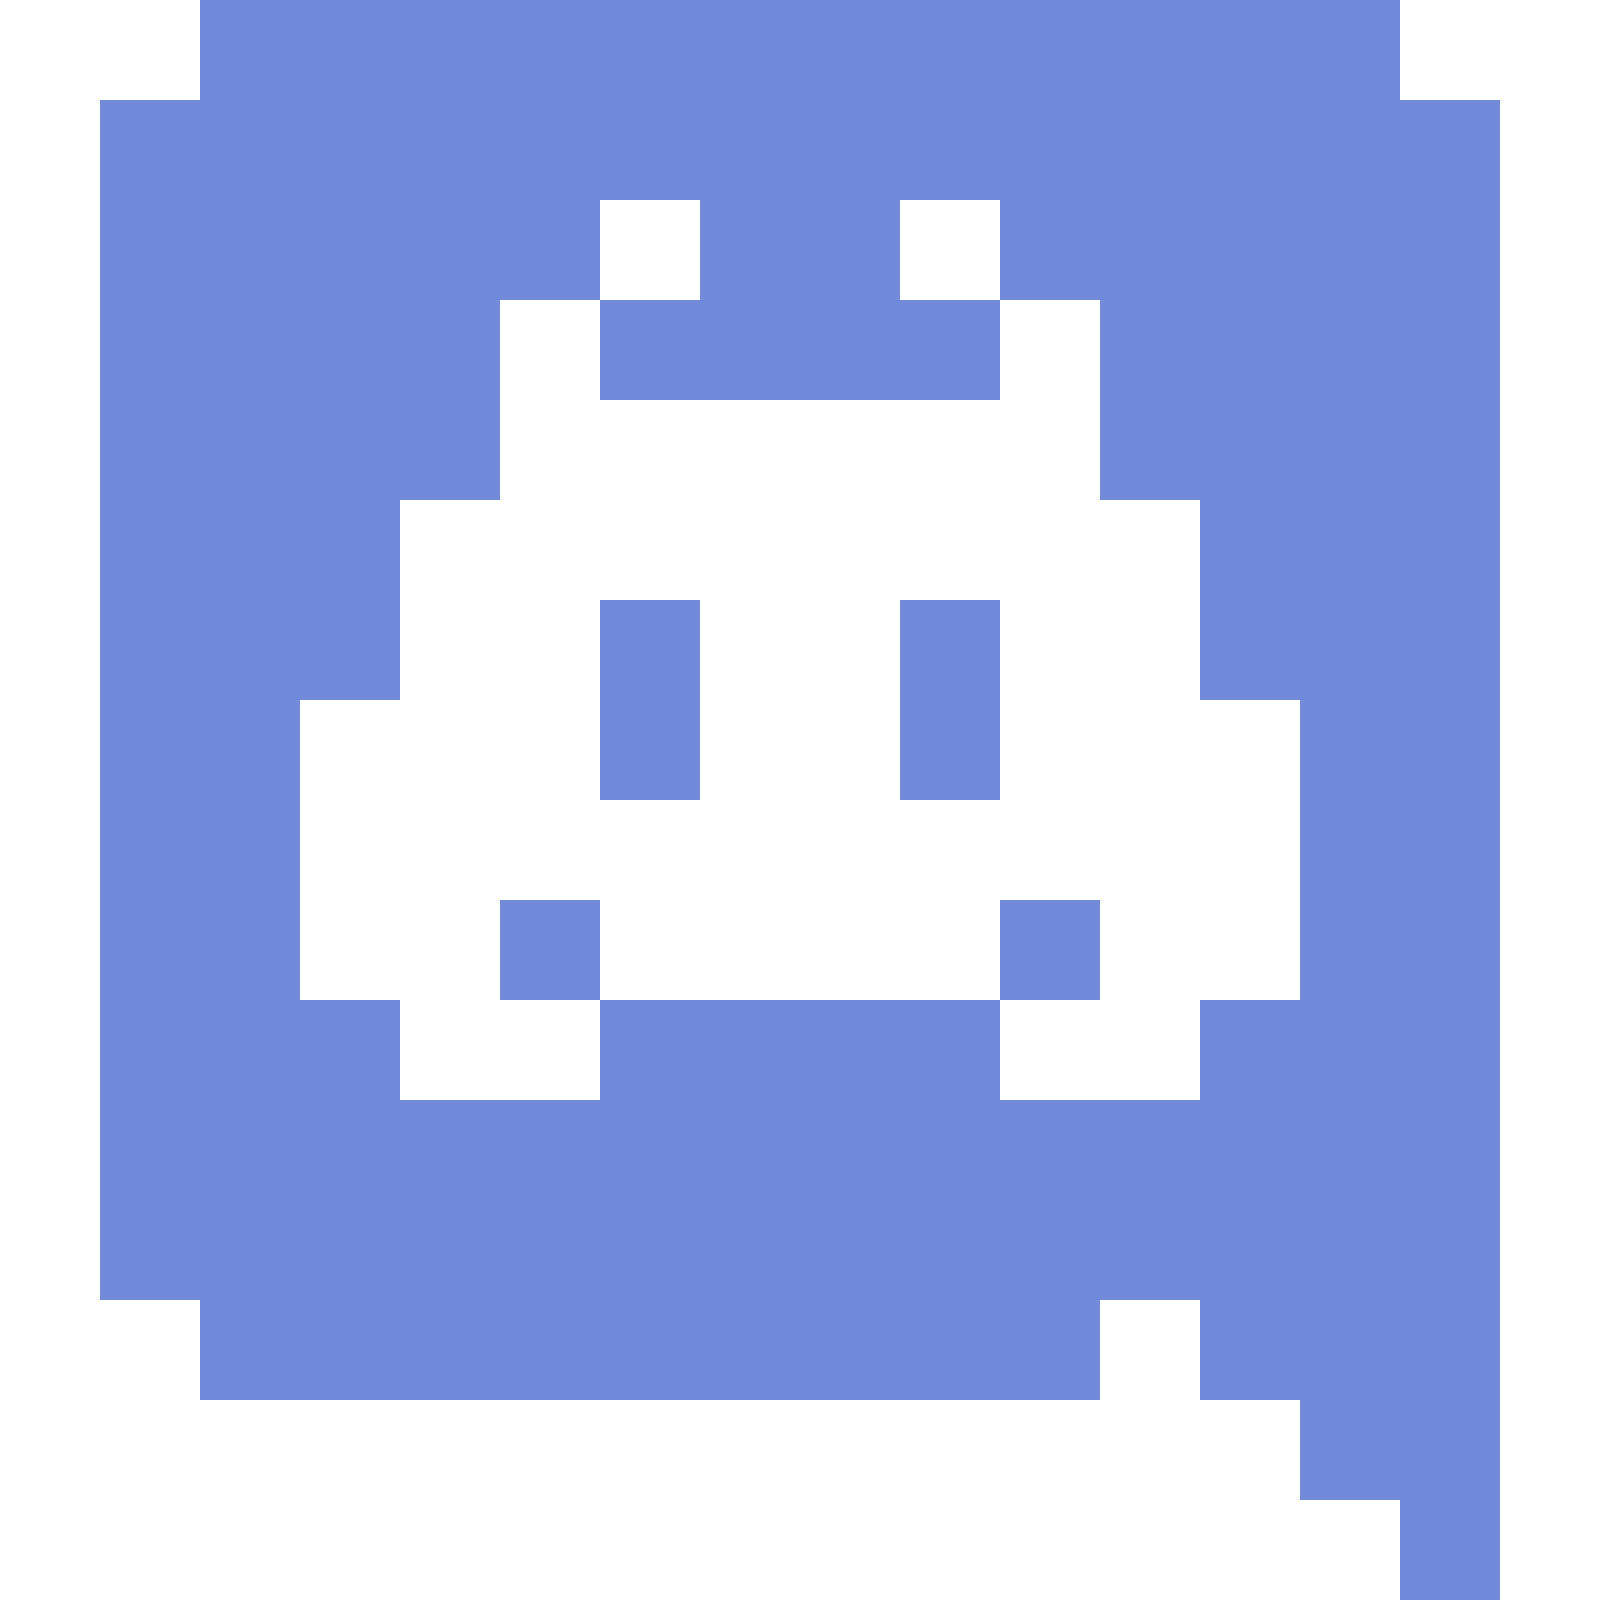 Discord logo pixel art by JulPixel on DeviantArt